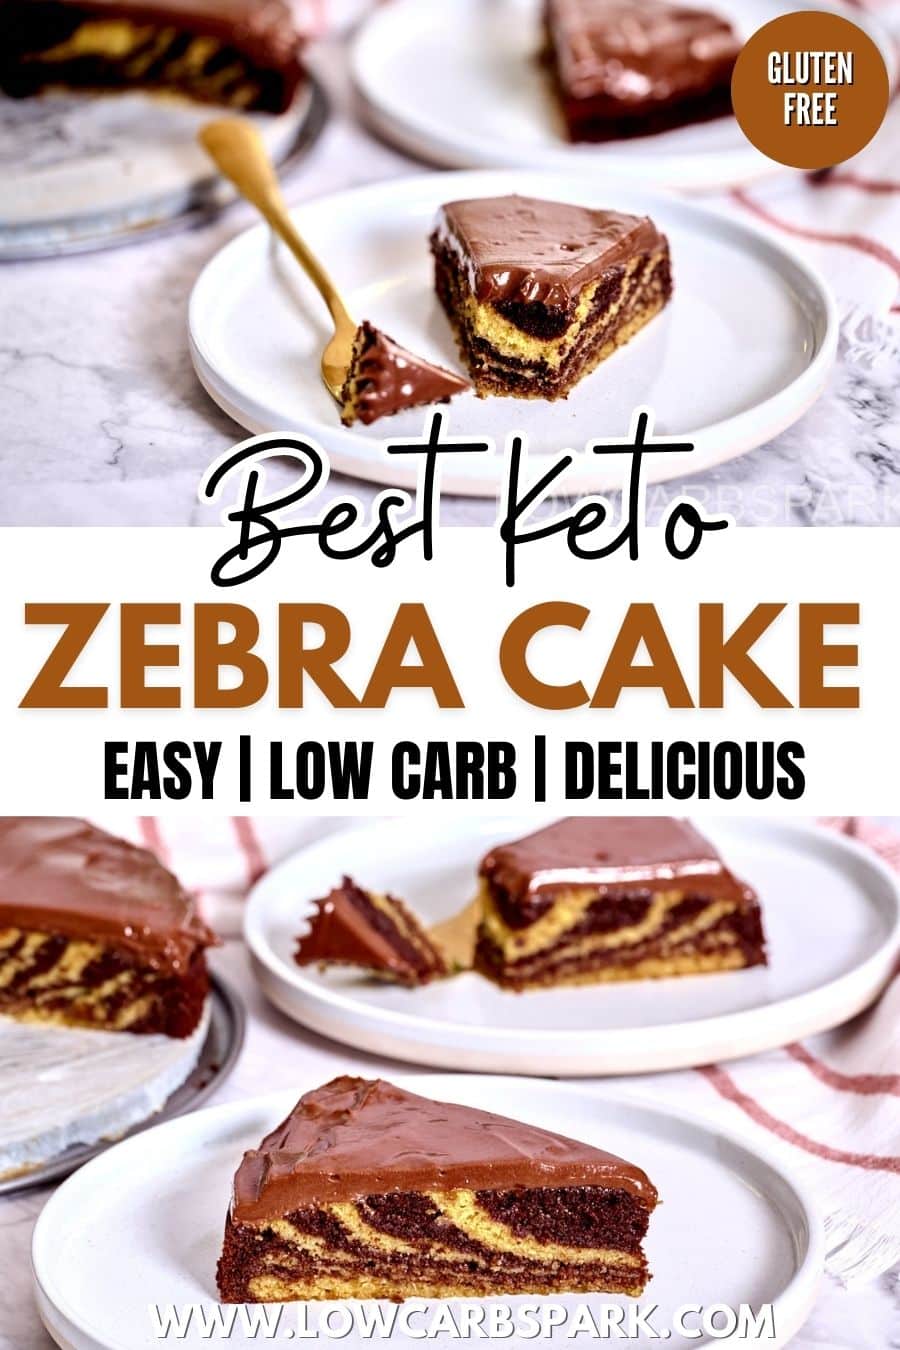 Keto Zebra Cake